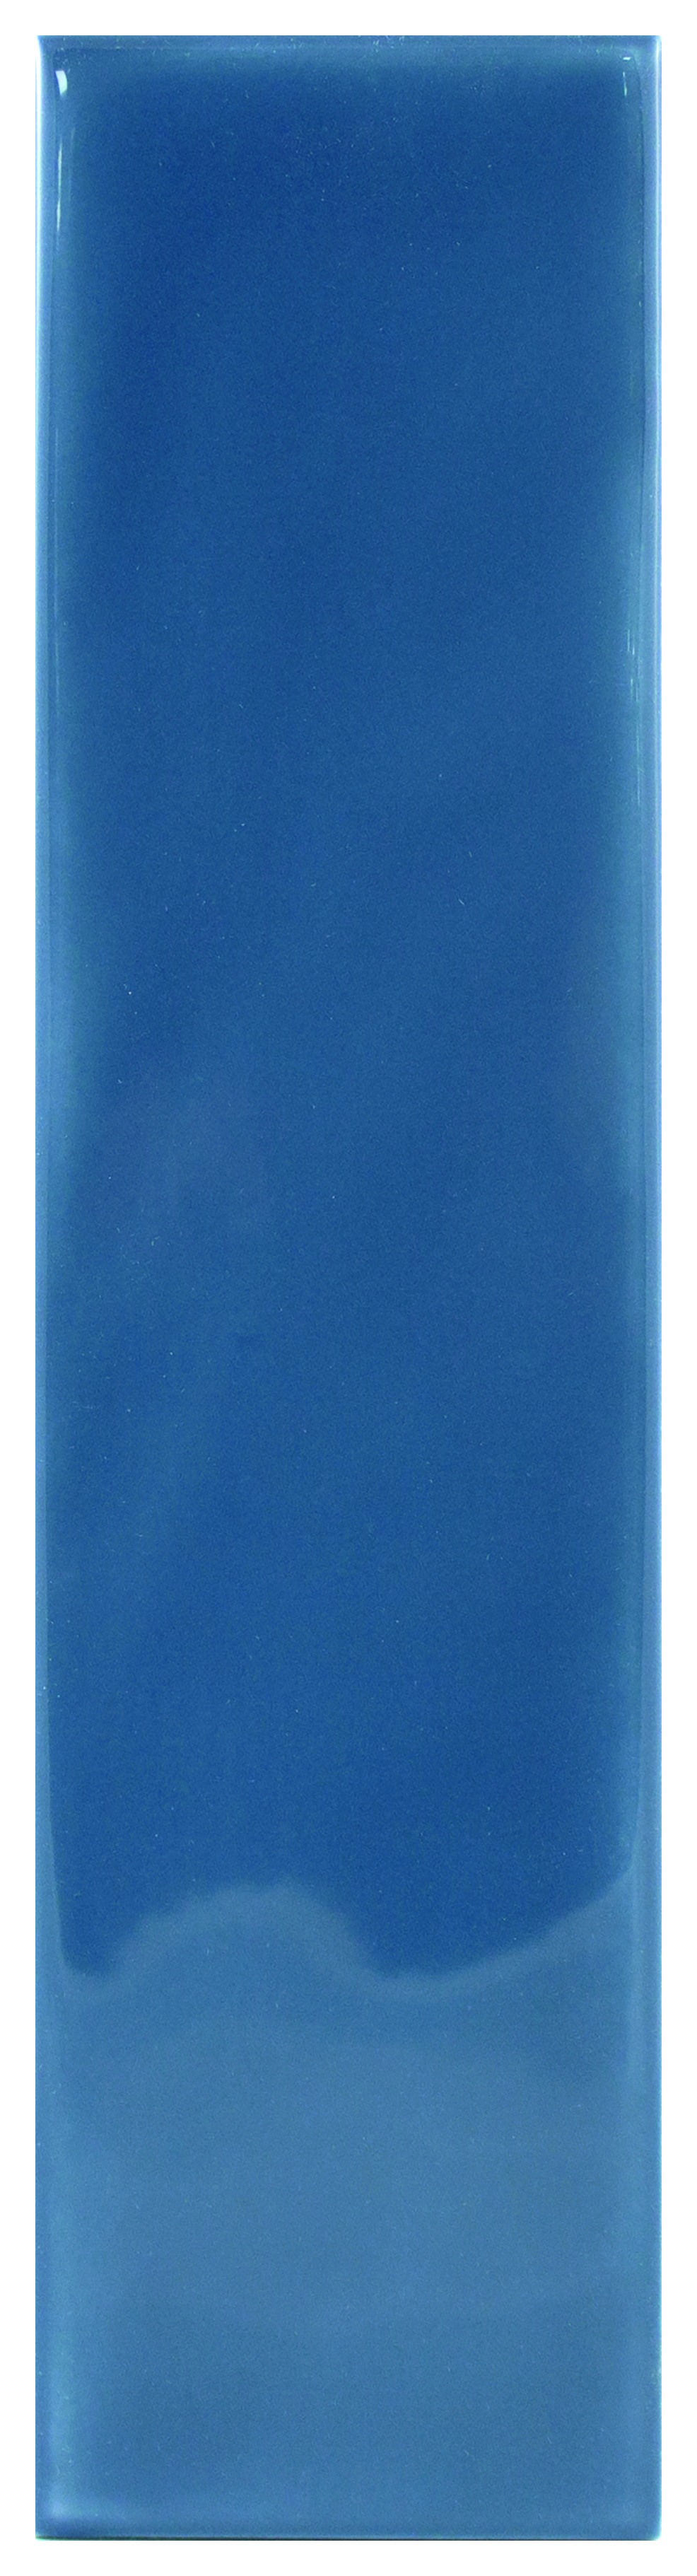 Wickes Boutique Flair Gradient Plain Blue Gloss Ceramic Wall Tile - Cut Sample